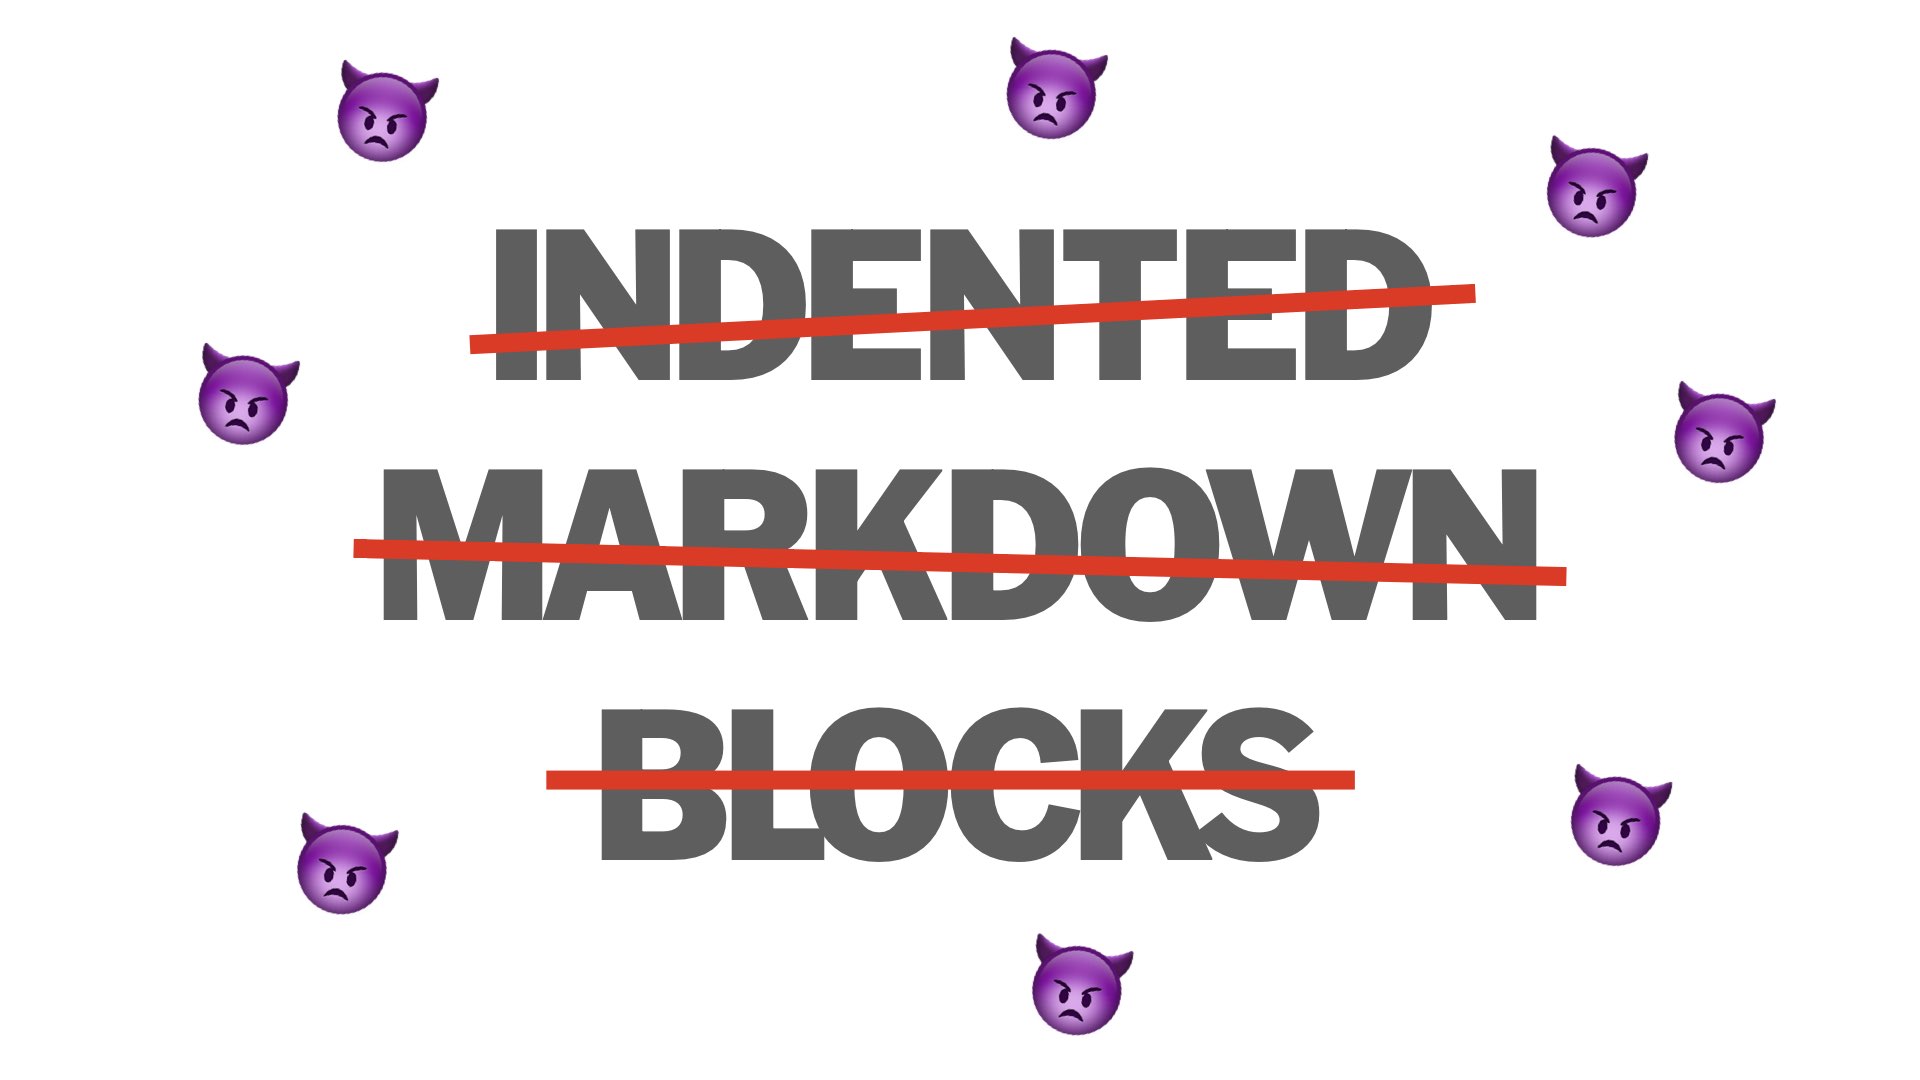 NO MORE indented markdown blocks